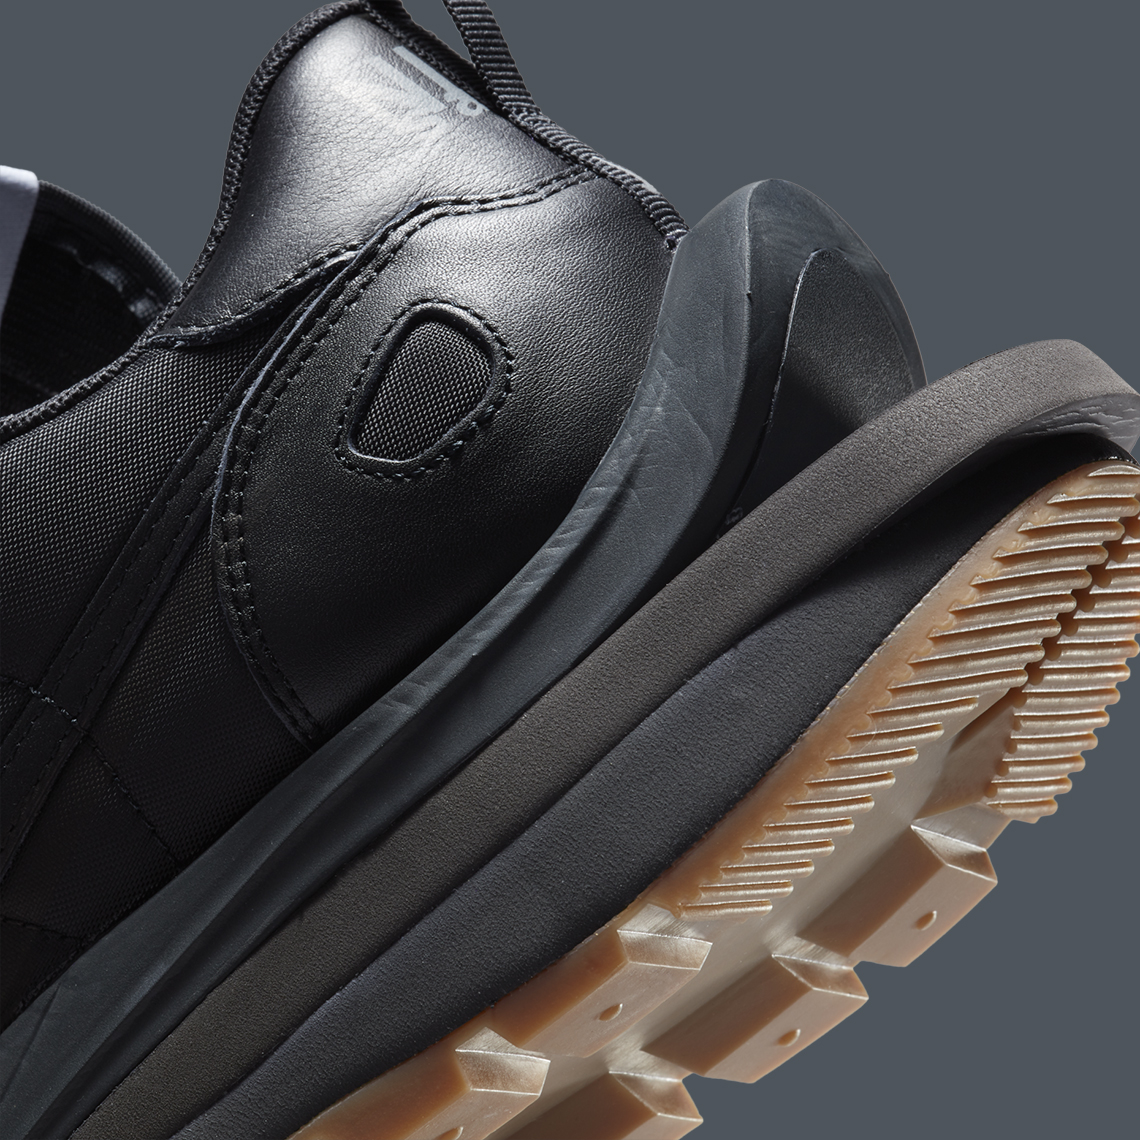 Sacai Nike Vaporwaffle Black Gum Dd1875 100 Release Date 11